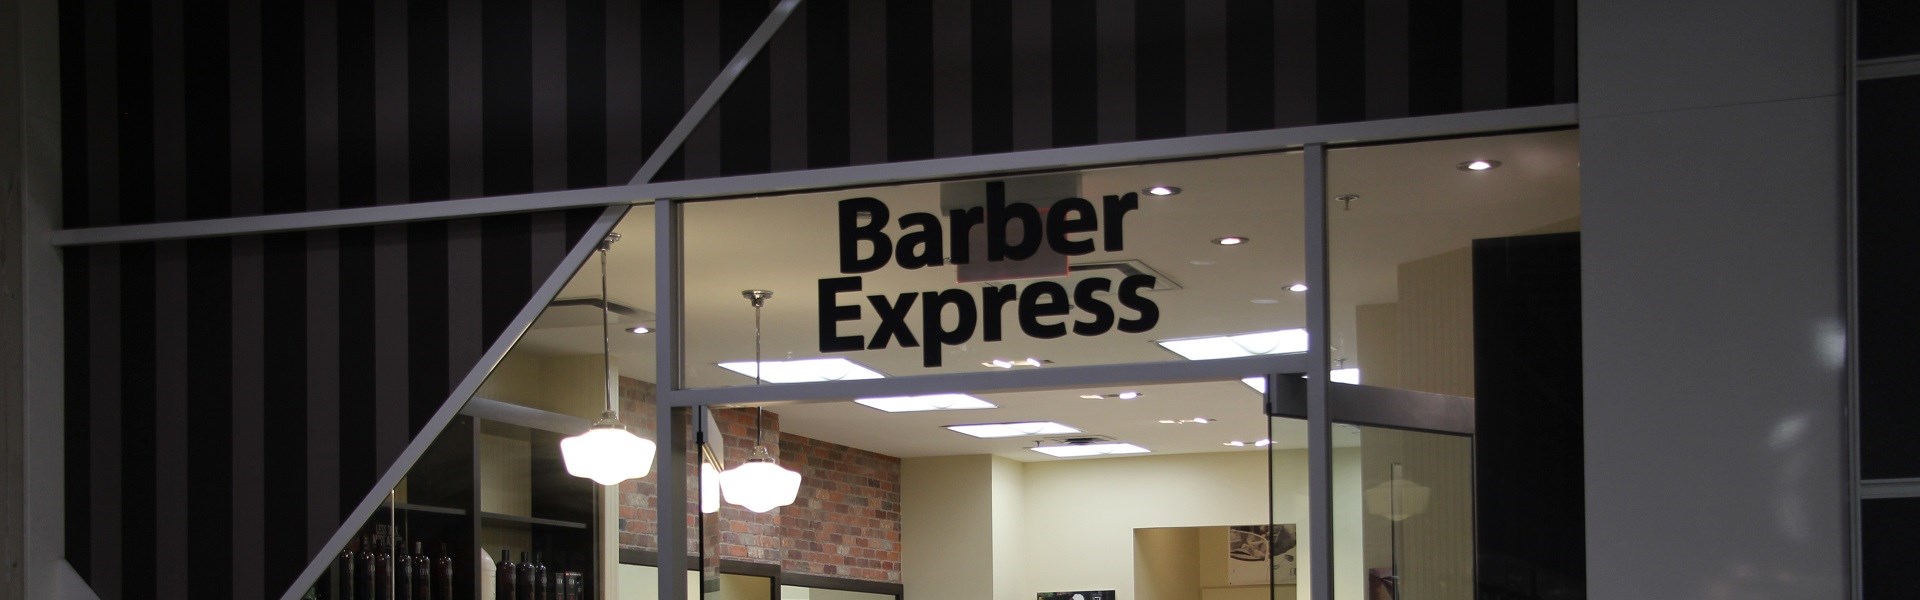 Barber Express